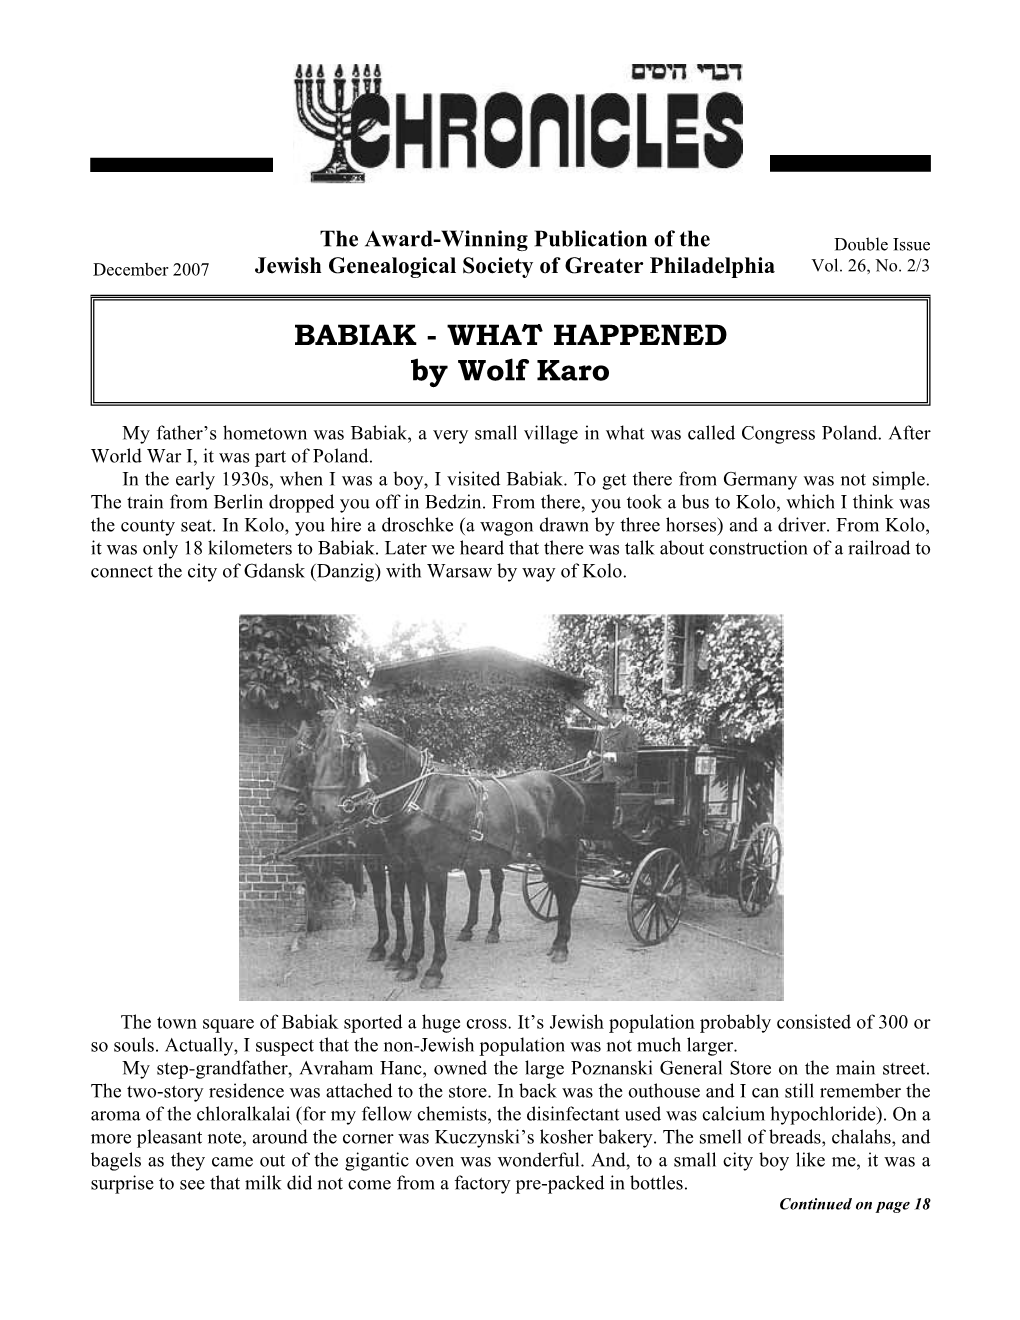 BABIAK - WHAT HAPPENED by Wolf Karo